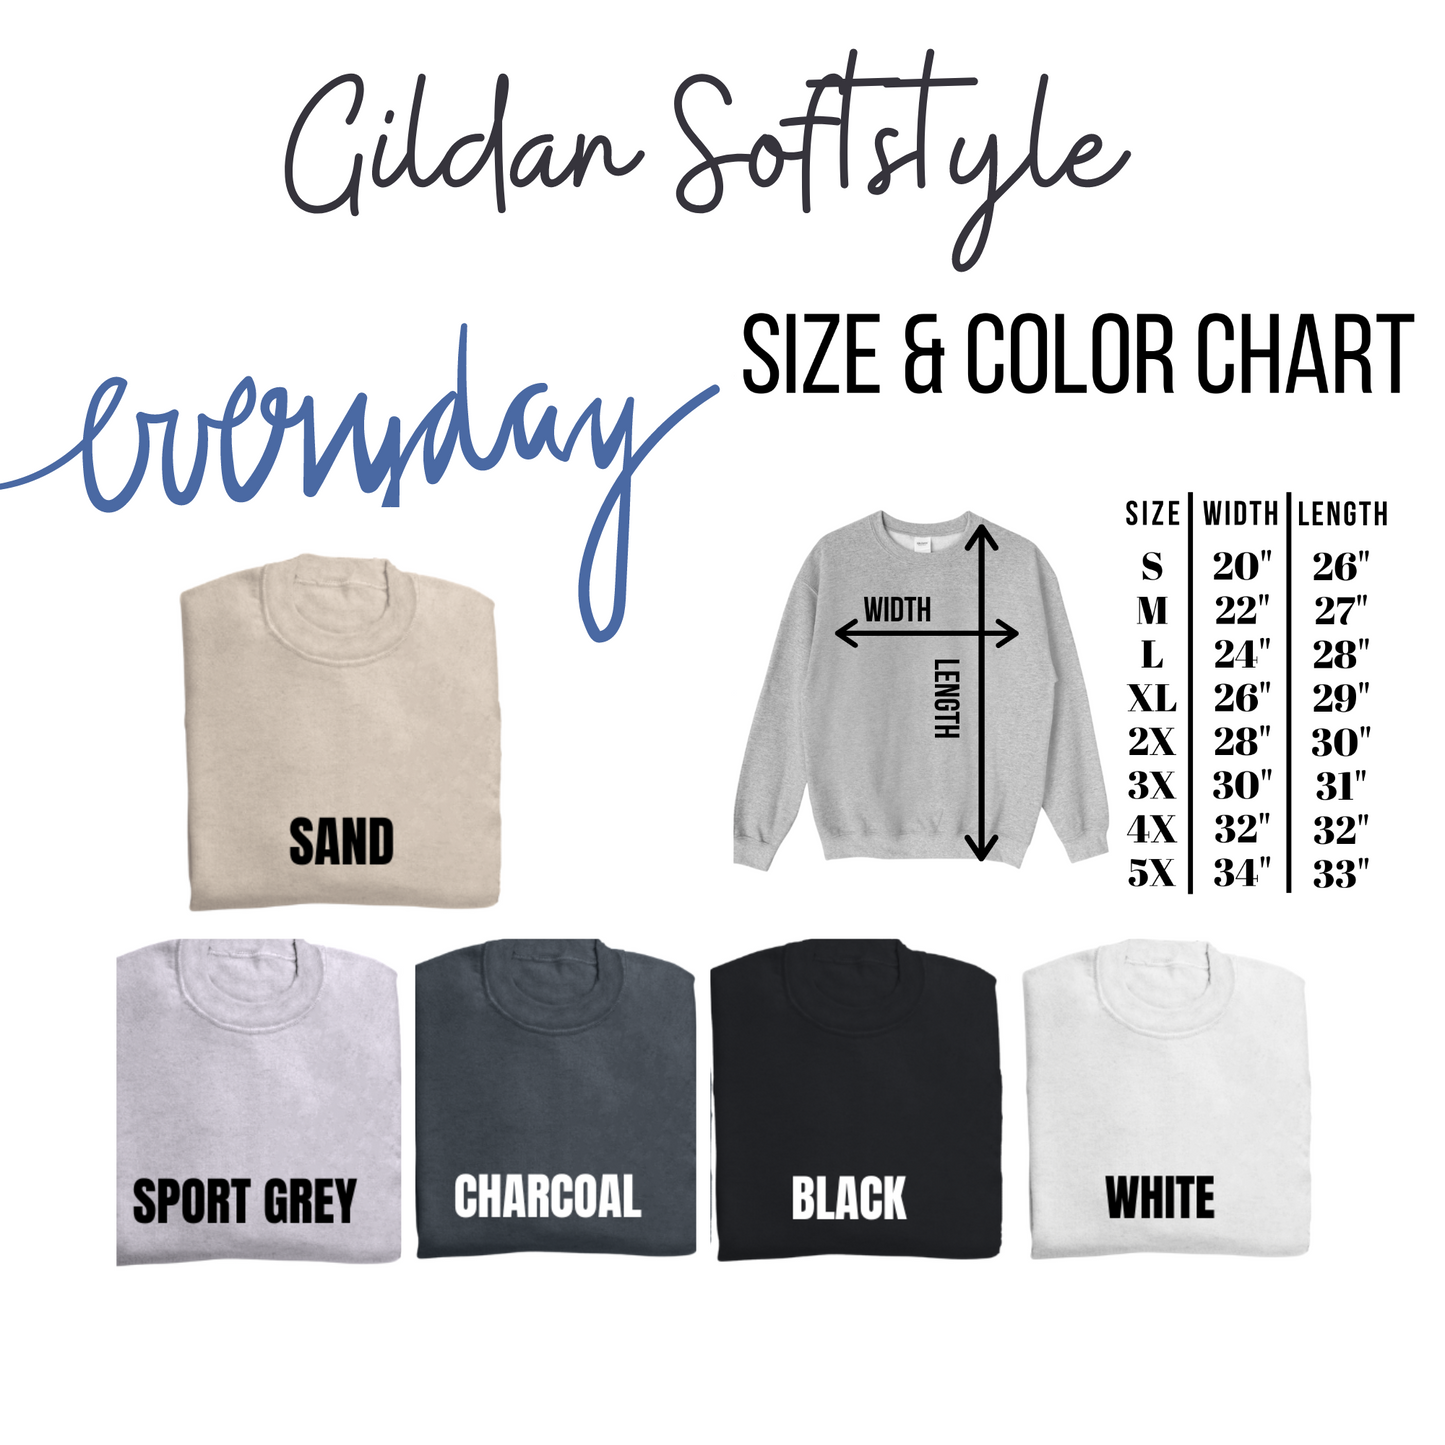 Baseball Tyopgraphy Gildan Softstyle Crewneck or Tshirt